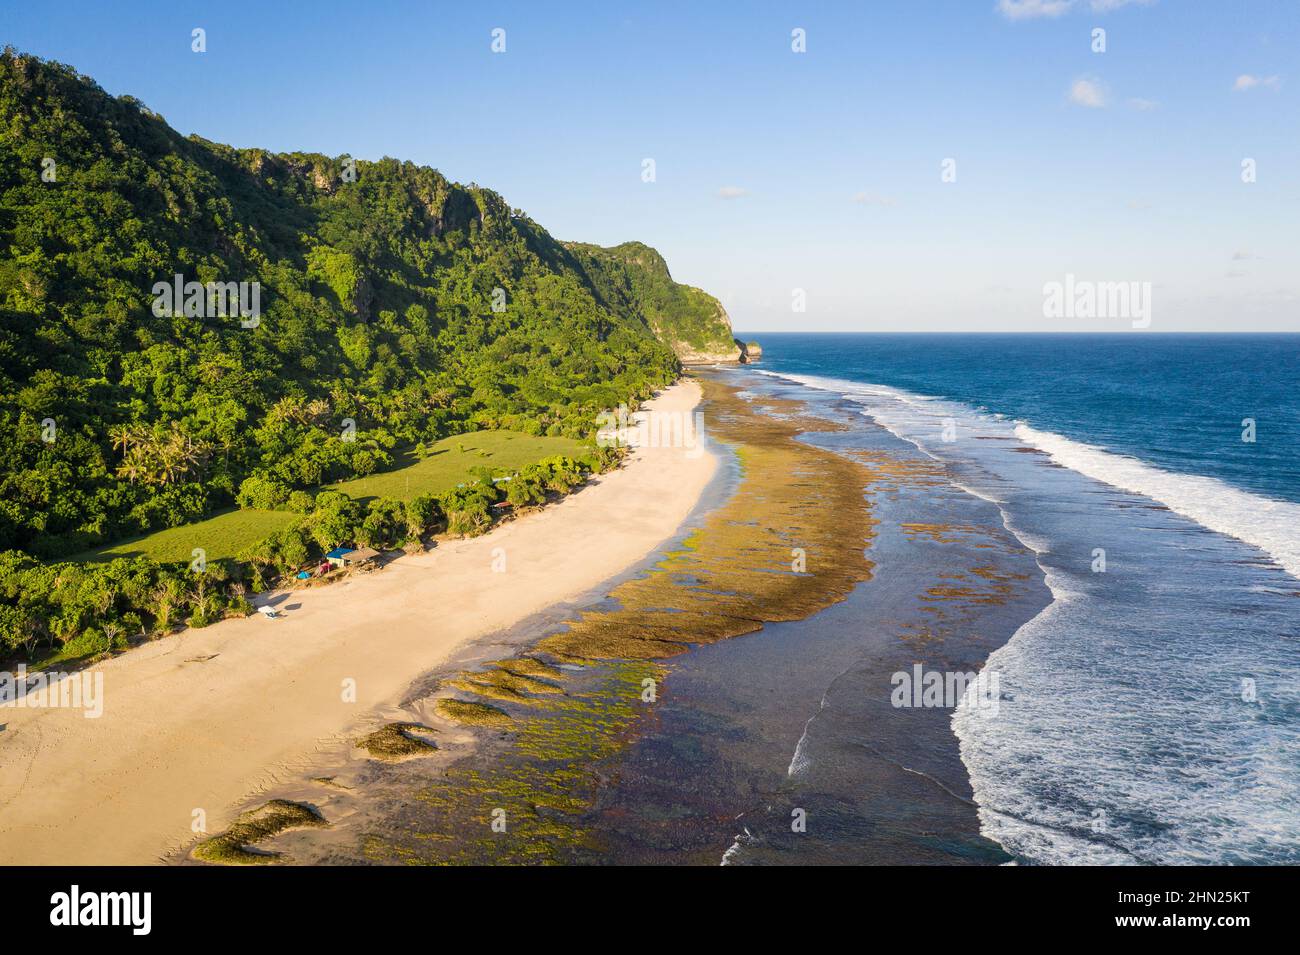 Vista espectacular de la playa Nyang Nyang en la parte sur de la península de Bukit en Bali, Indonesia Foto de stock